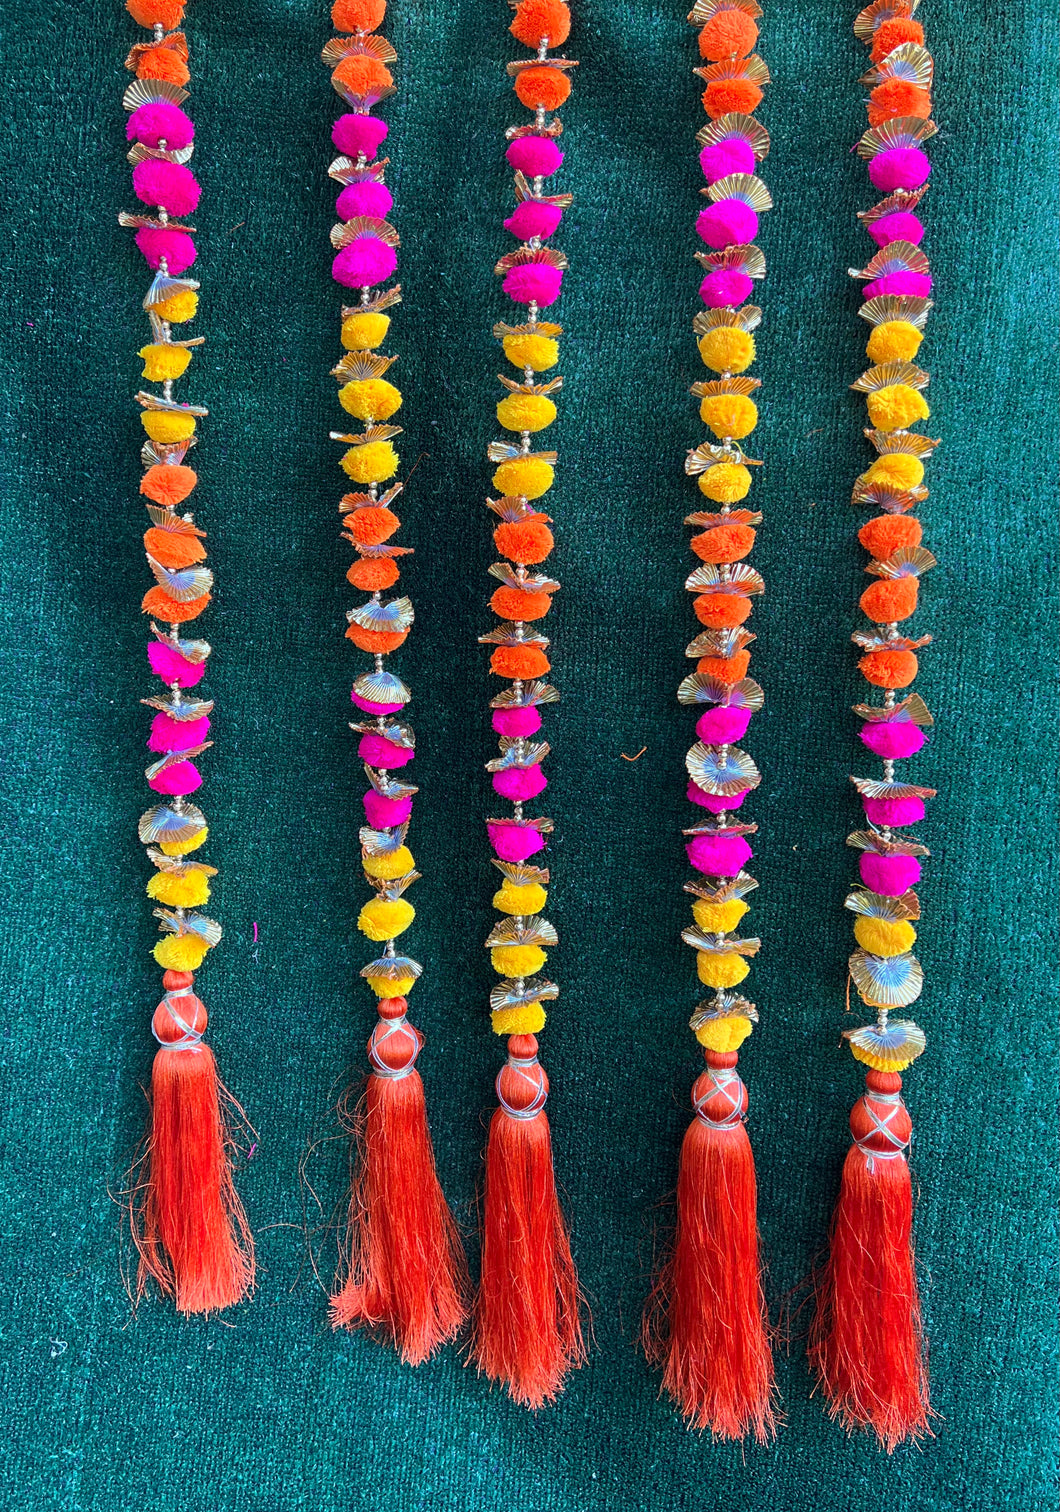 Large Pompom Garland with Tassels- Set of 2